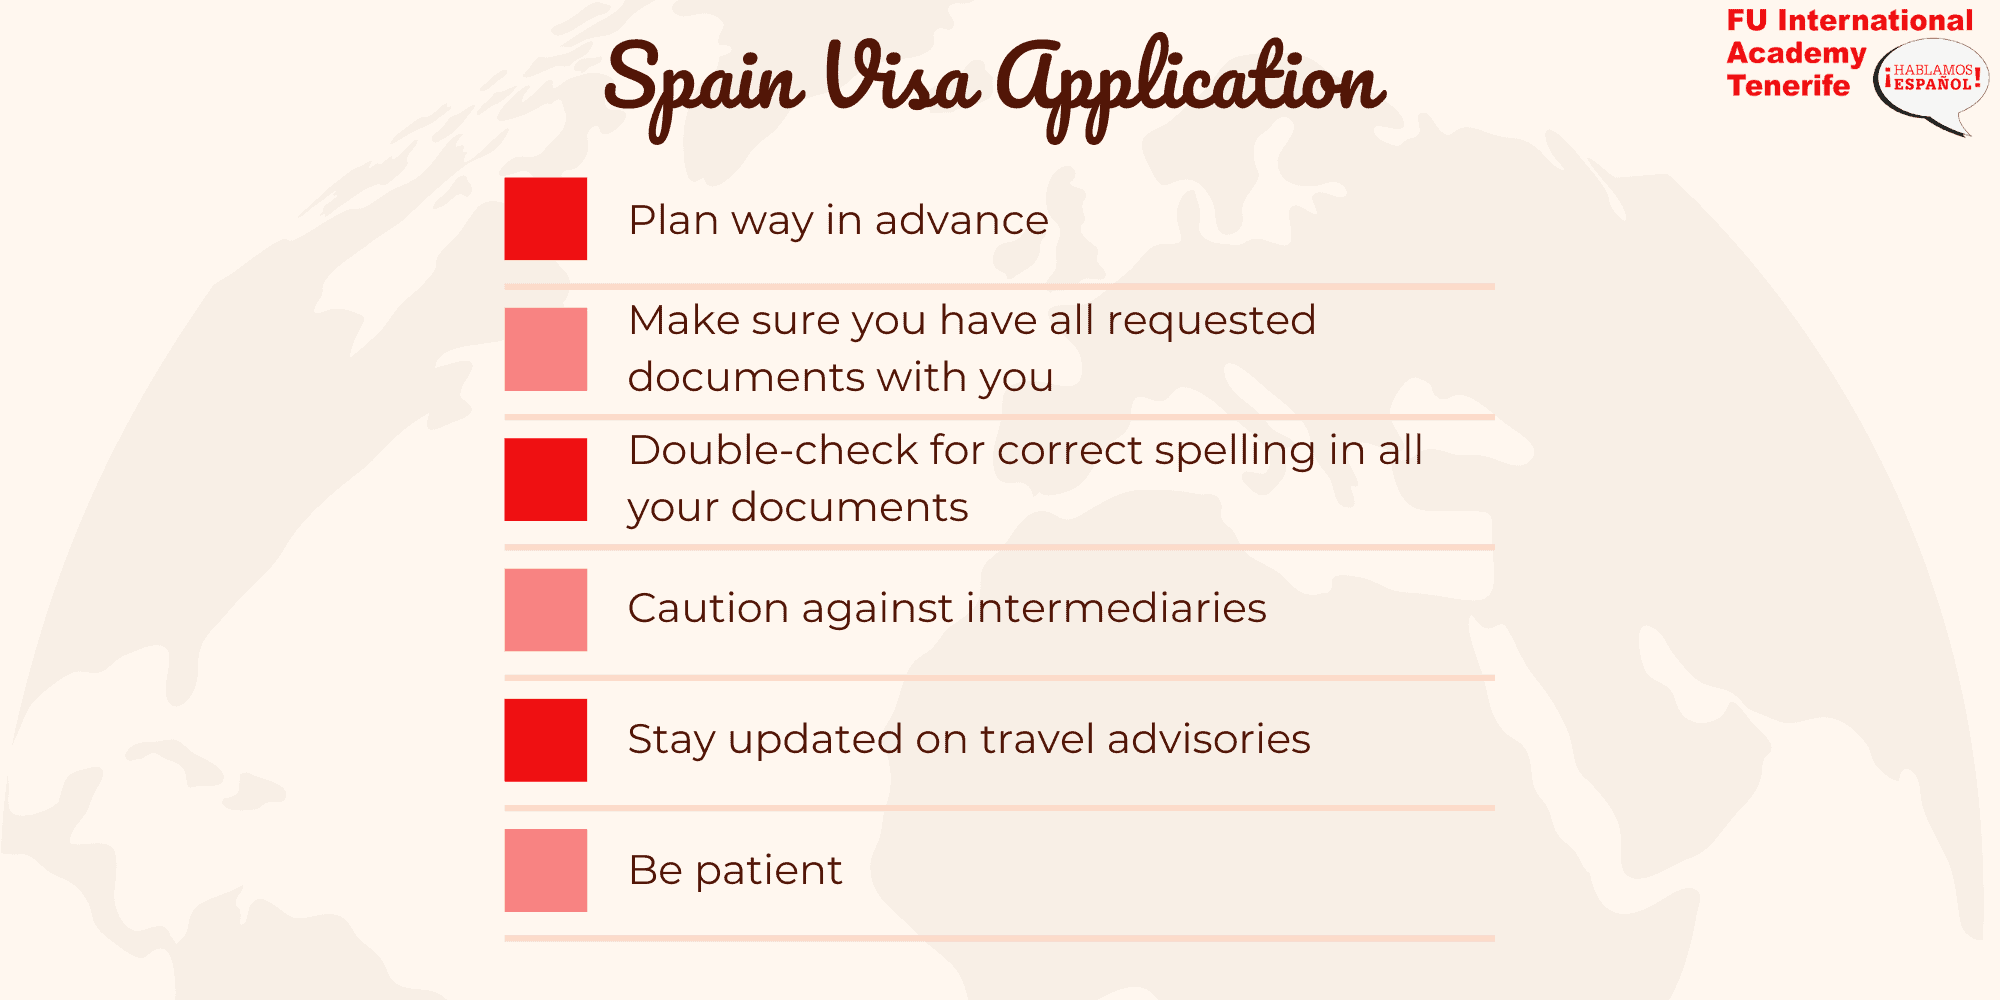 Spain visa application list